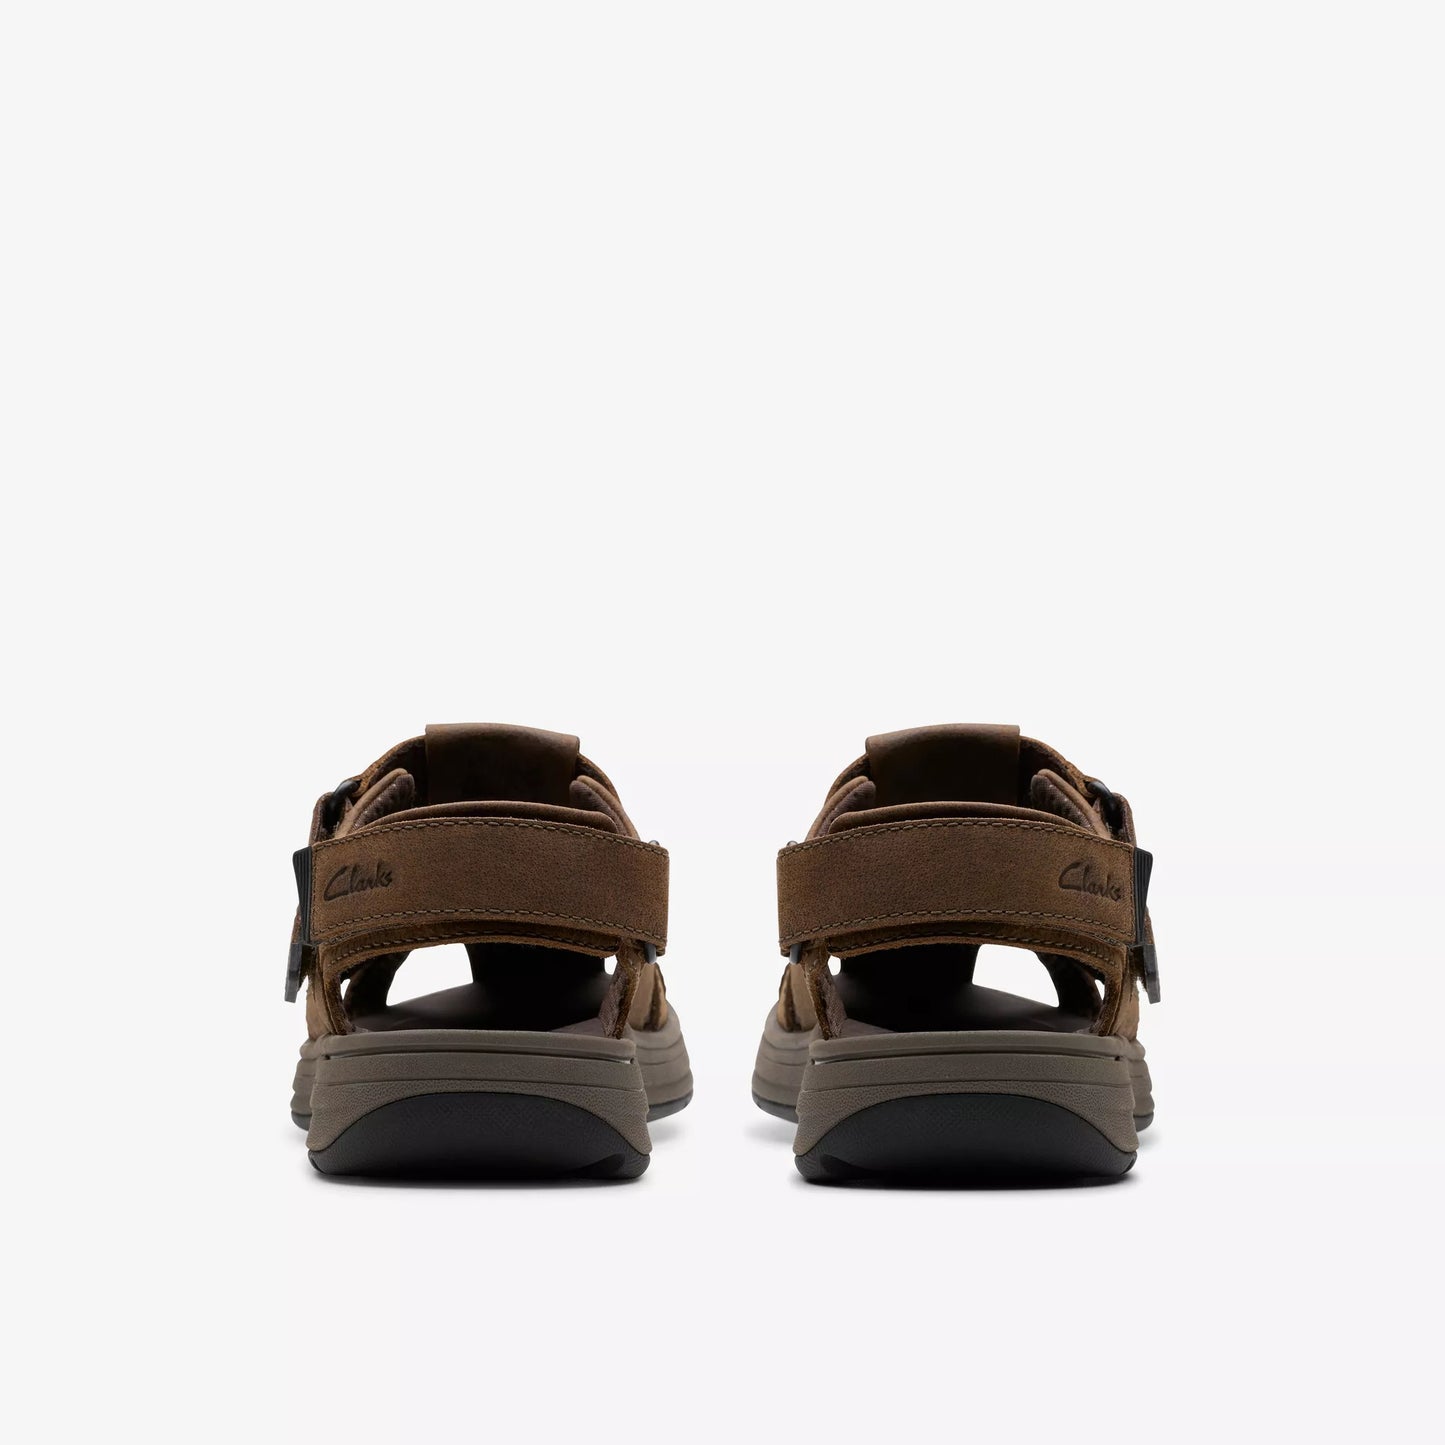 CLARKS | 男士休闲凉鞋 | SALTWAY COVE DARK BROWN LEA | 棕色的